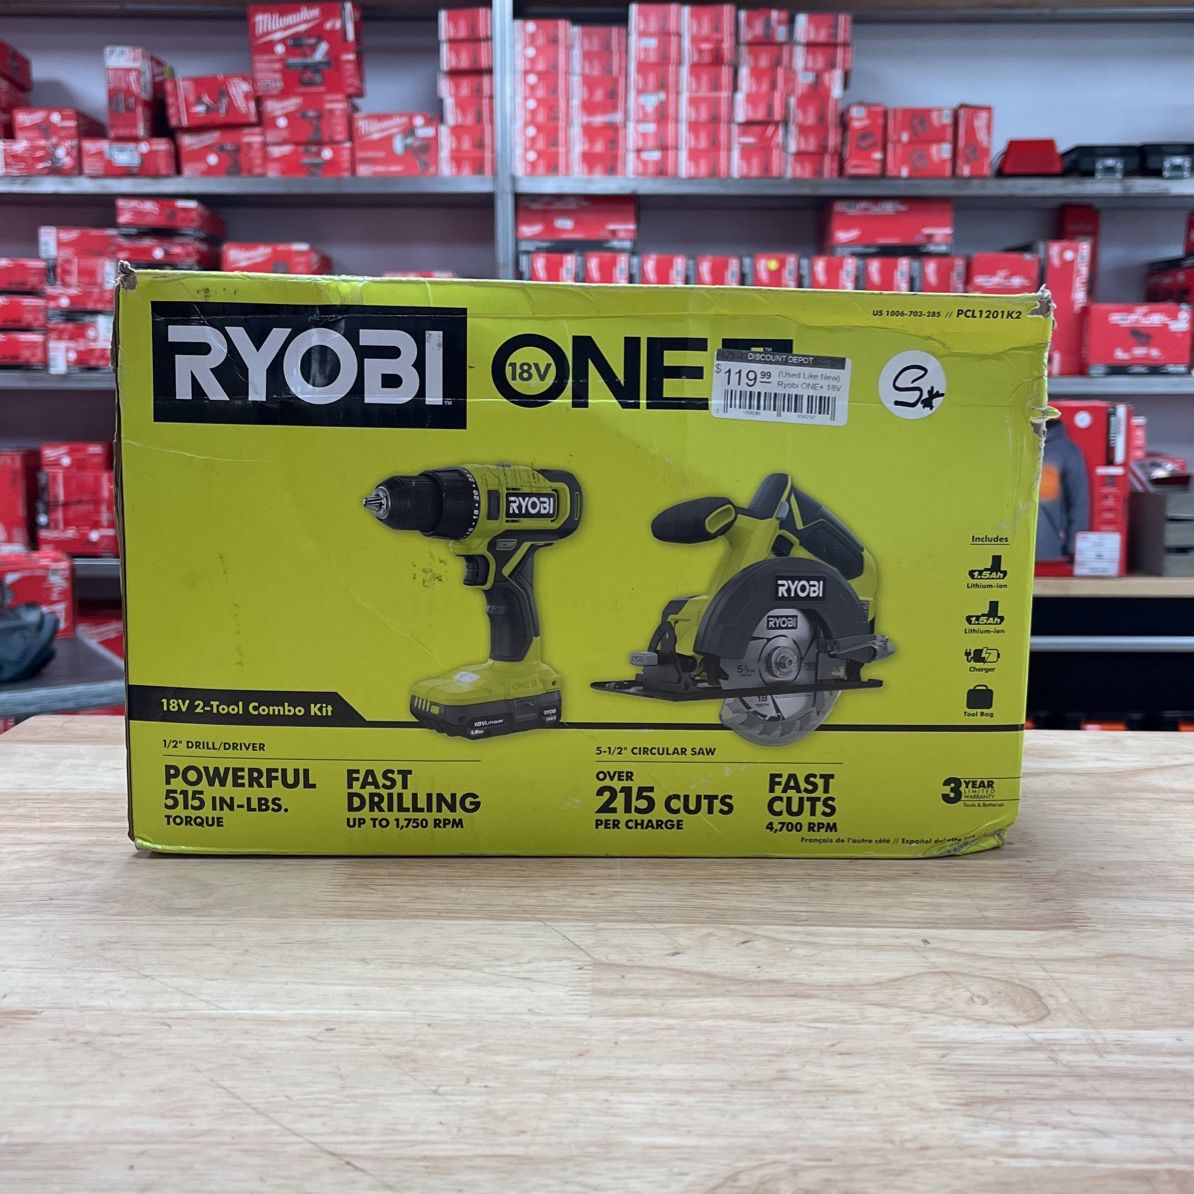 RYOBI ONE+ 18V Cordless 2-Tool Combo Kit with Drill/Driver, Circular Saw, (2) 1.5 Ah Batteries, and Charger